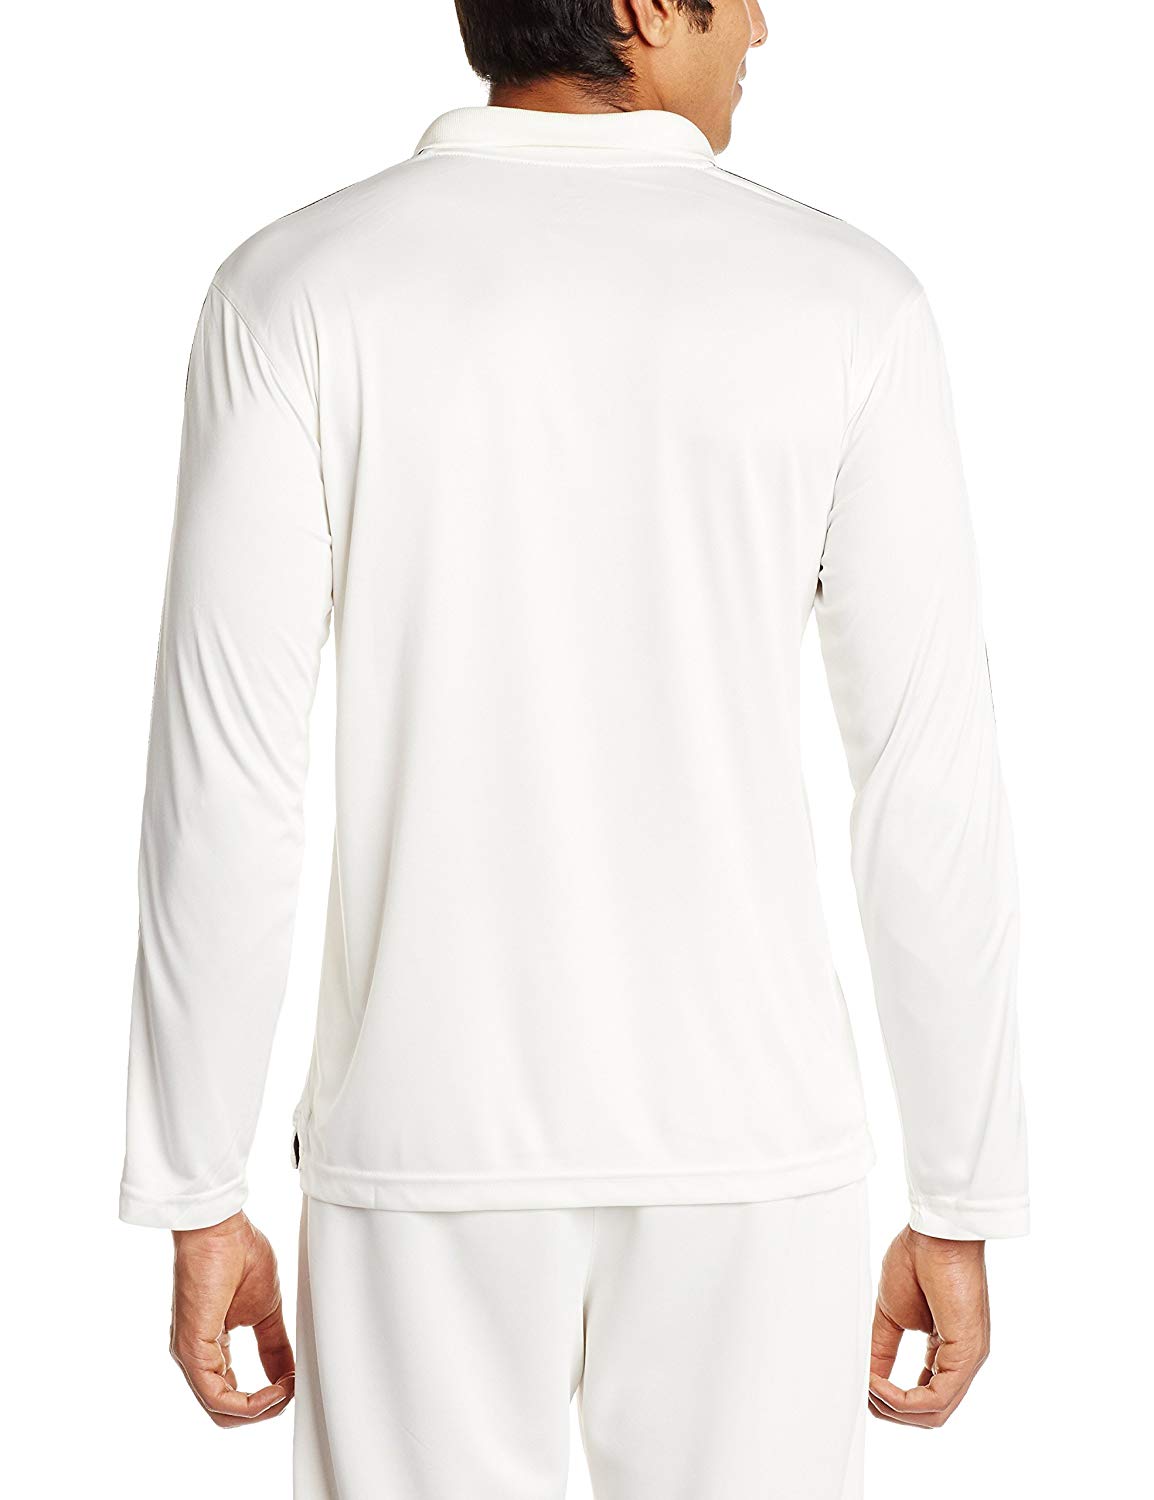 SG Century Full Sleeves Cricket Shirt (White) - Best Price online Prokicksports.com